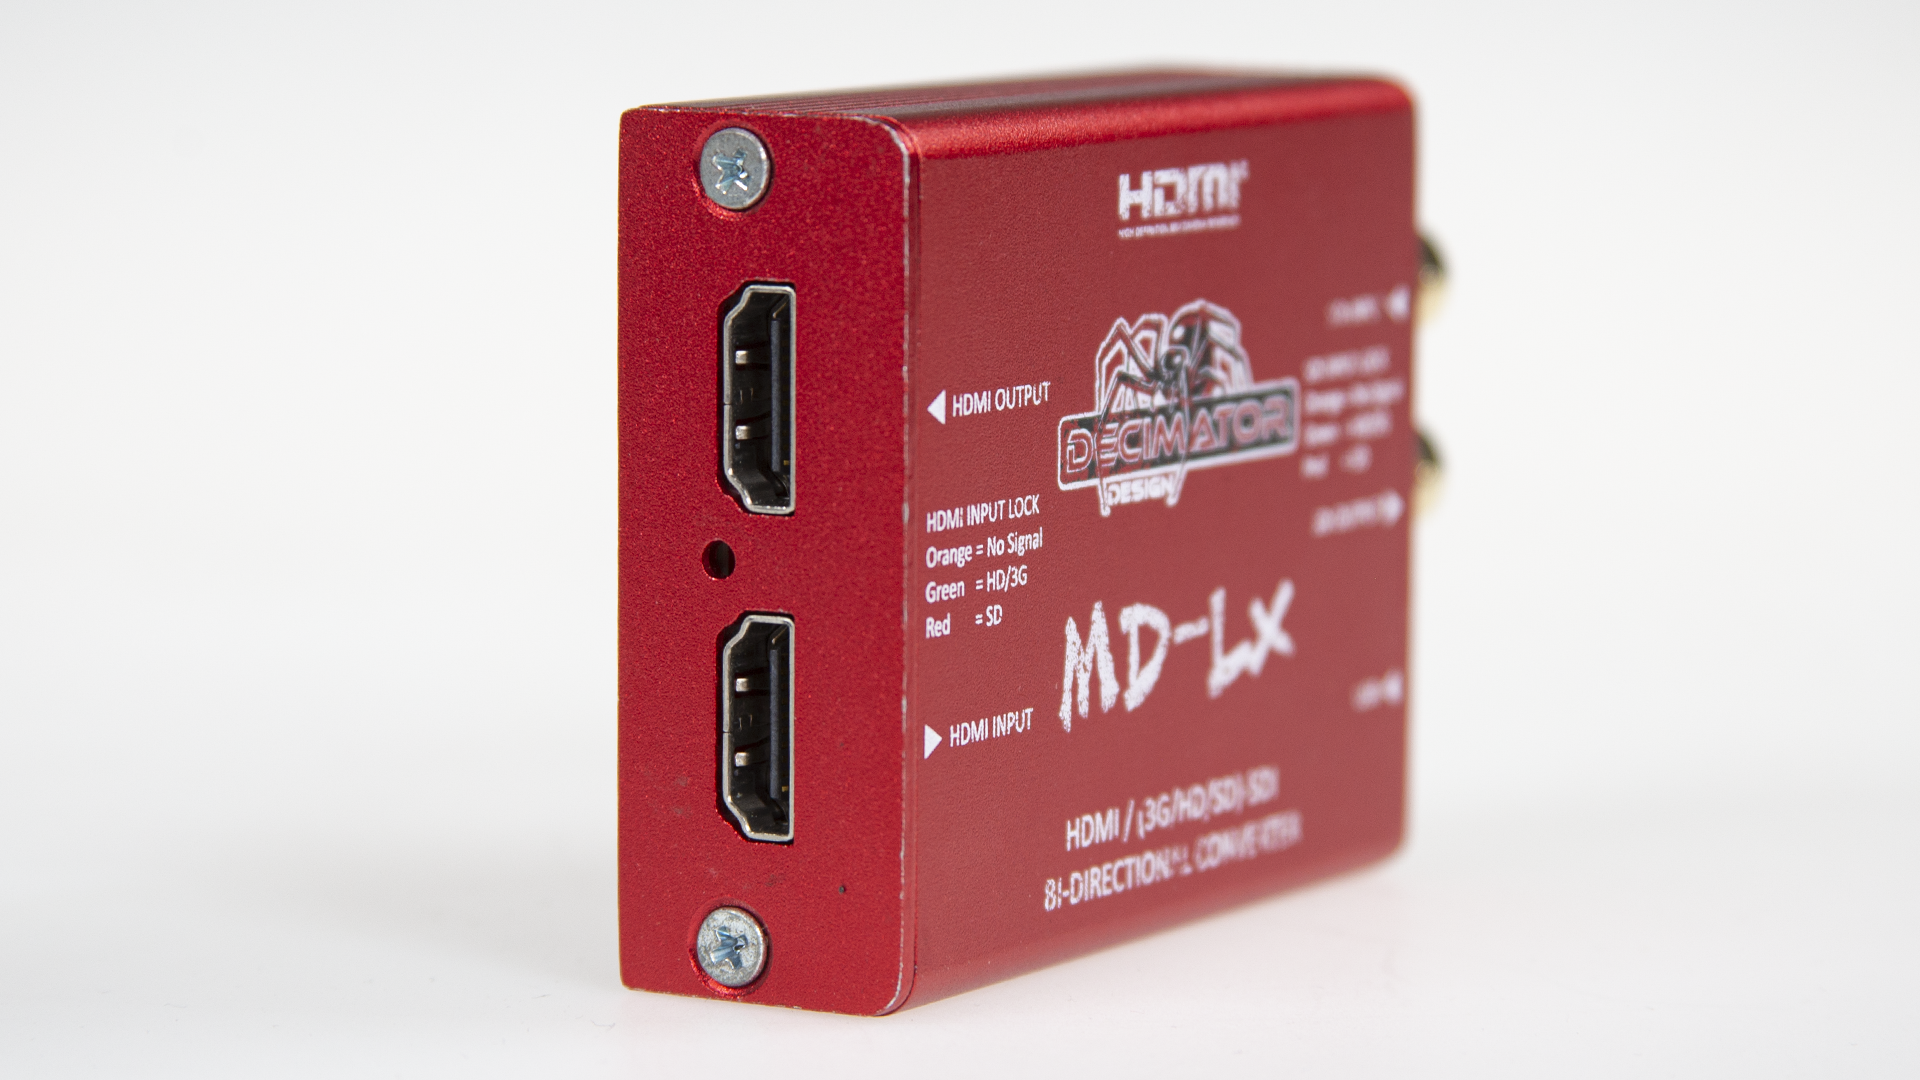 decimator MD-LX HDMI